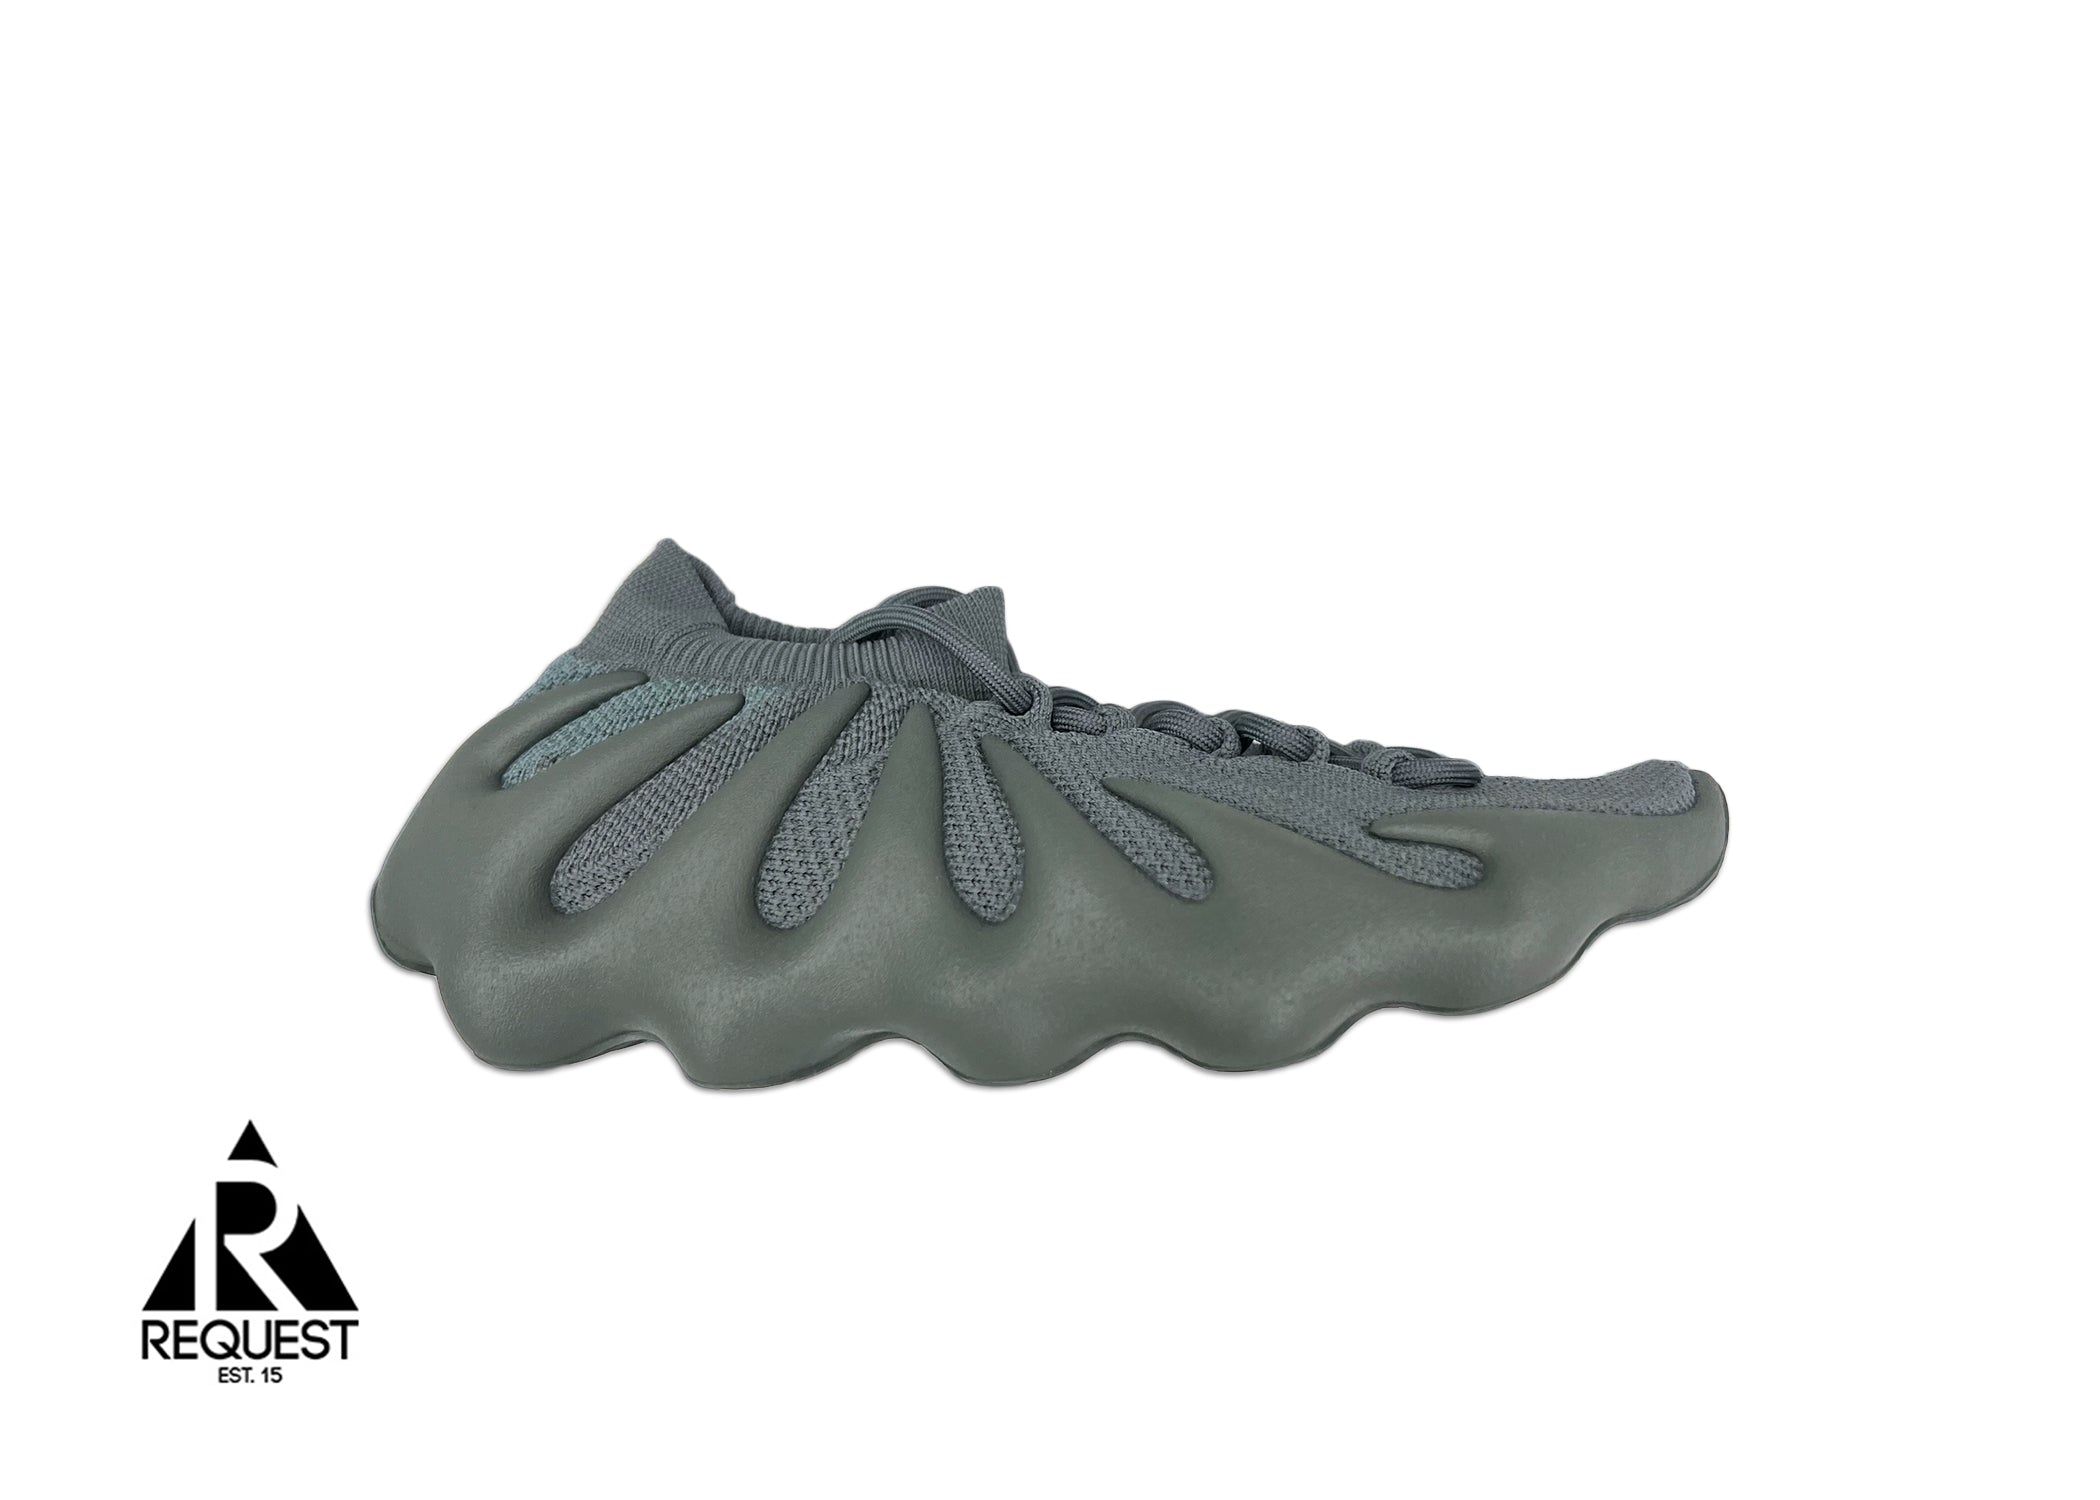 Adidas Yeezy 450 "Stone Teal"